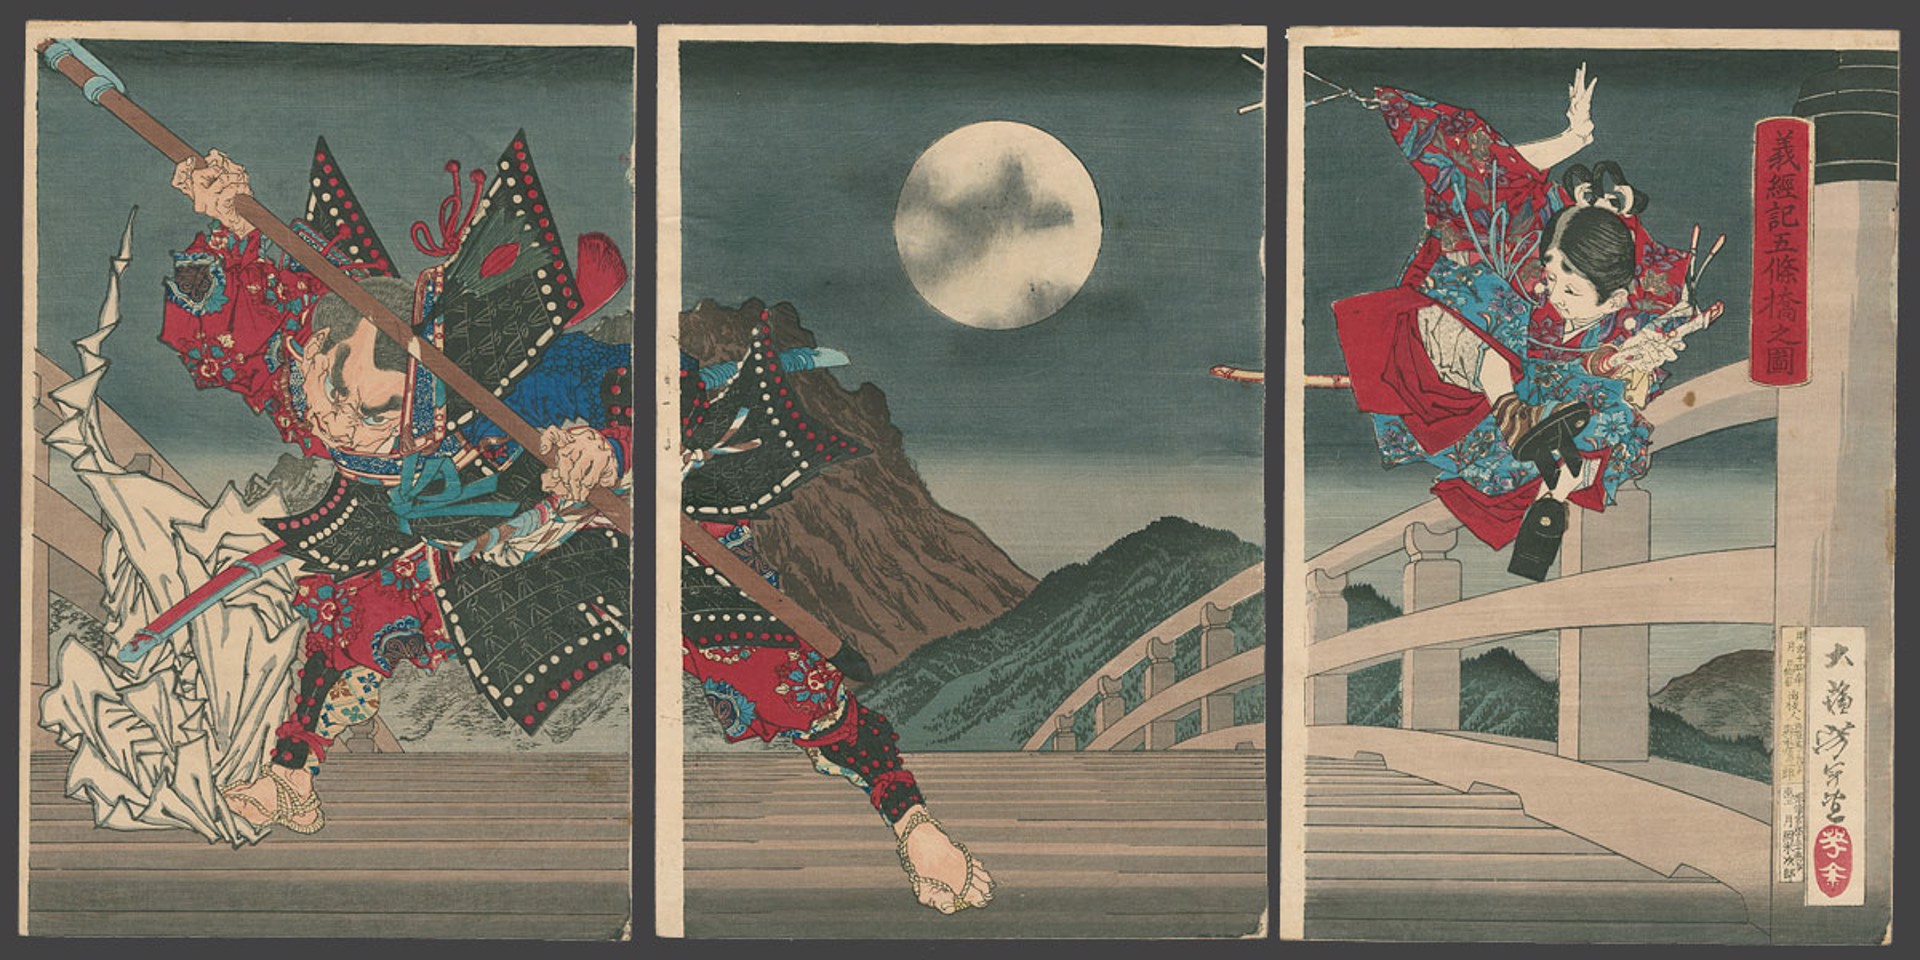 Benkei and Ushiwakamaru Dueling on Gojo Bridge An Episode from the Chronicles of Yoshitsune by Yoshitoshi